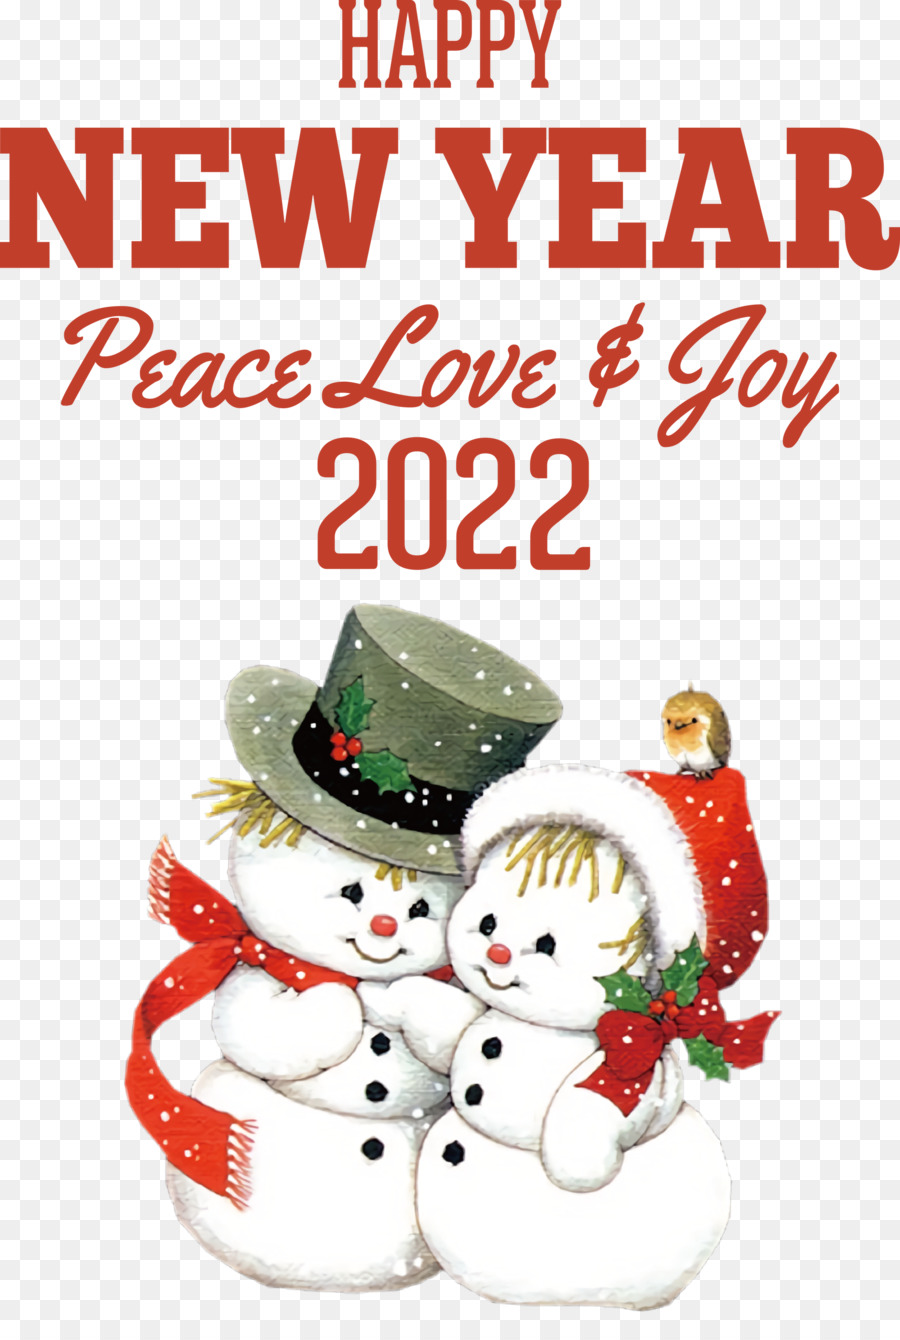 New Year 2022 Happy New Year 2022